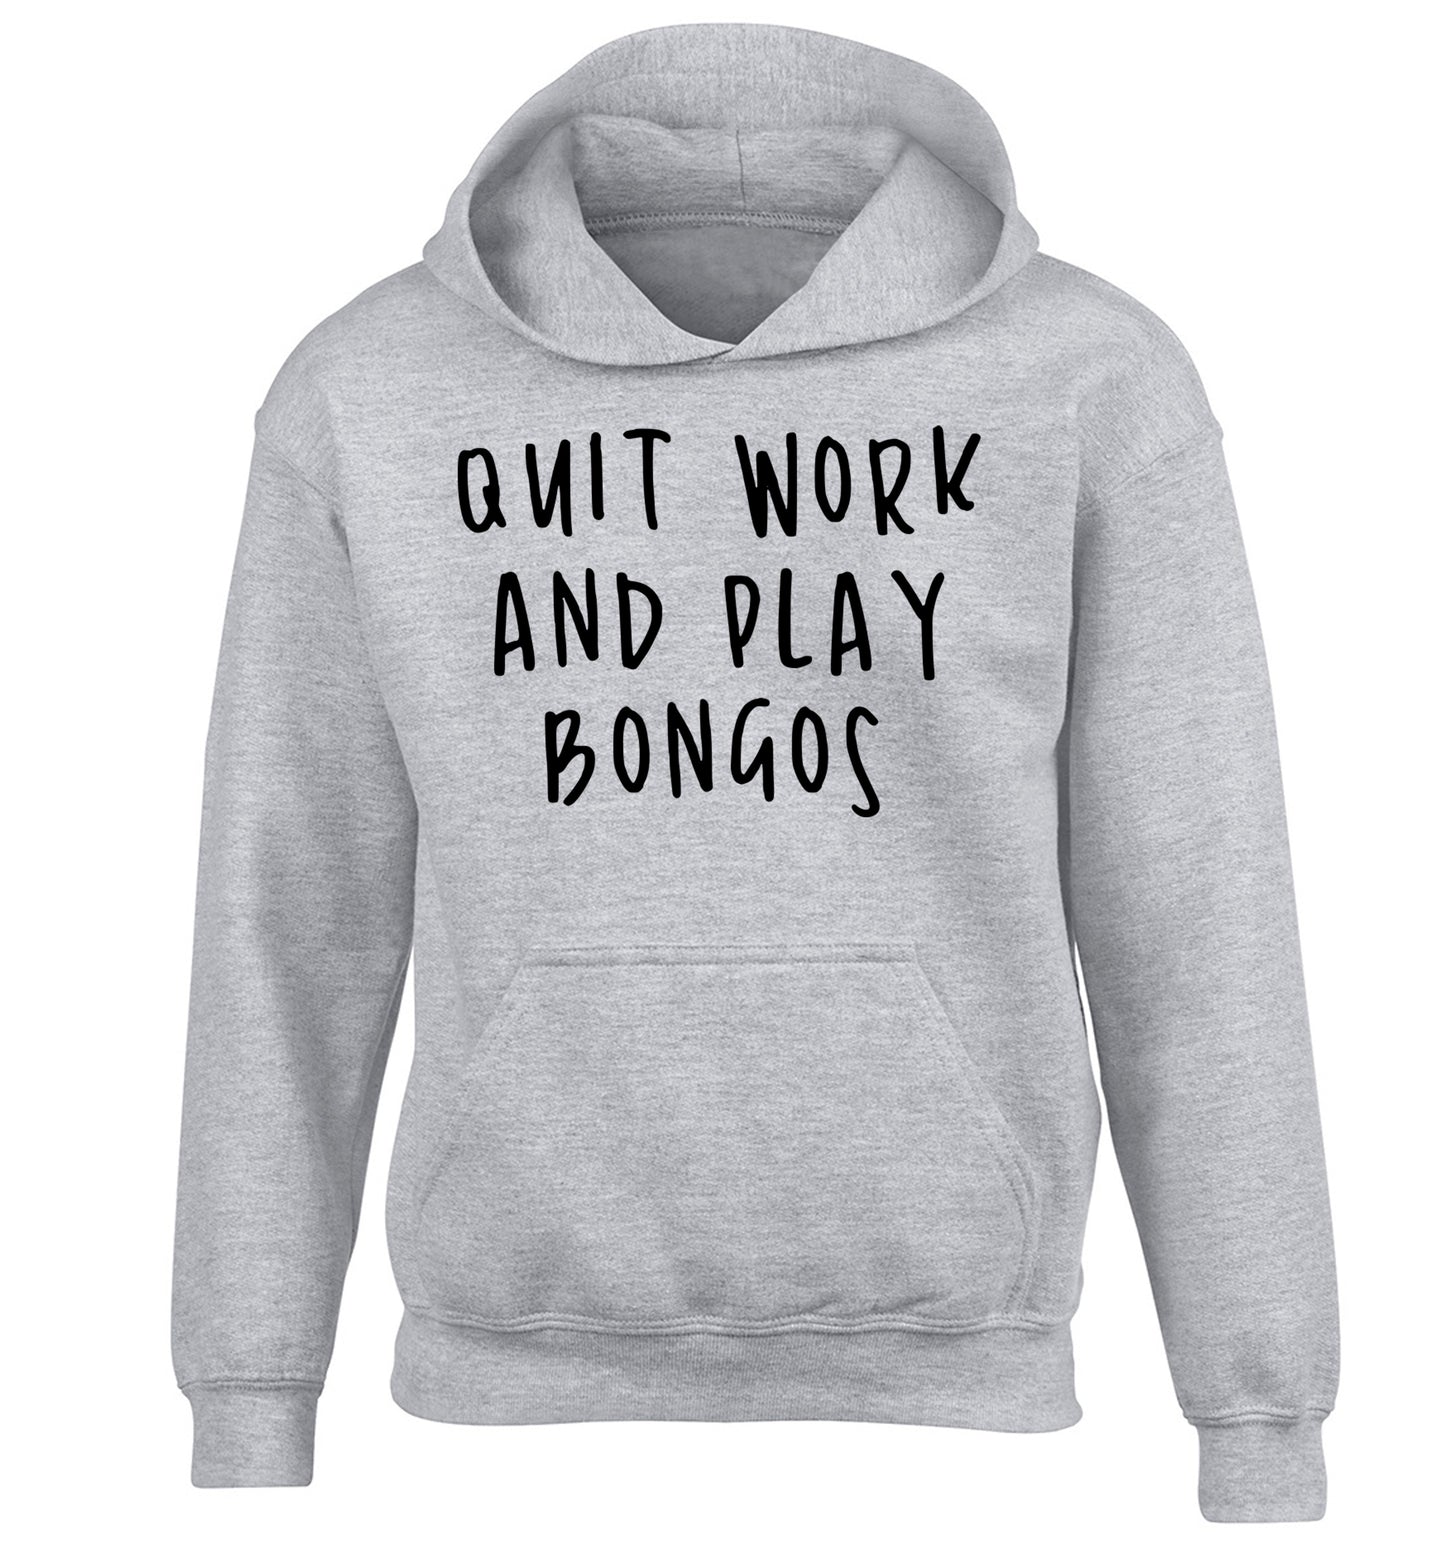 Quit work and play bongos children's grey hoodie 12-14 Years